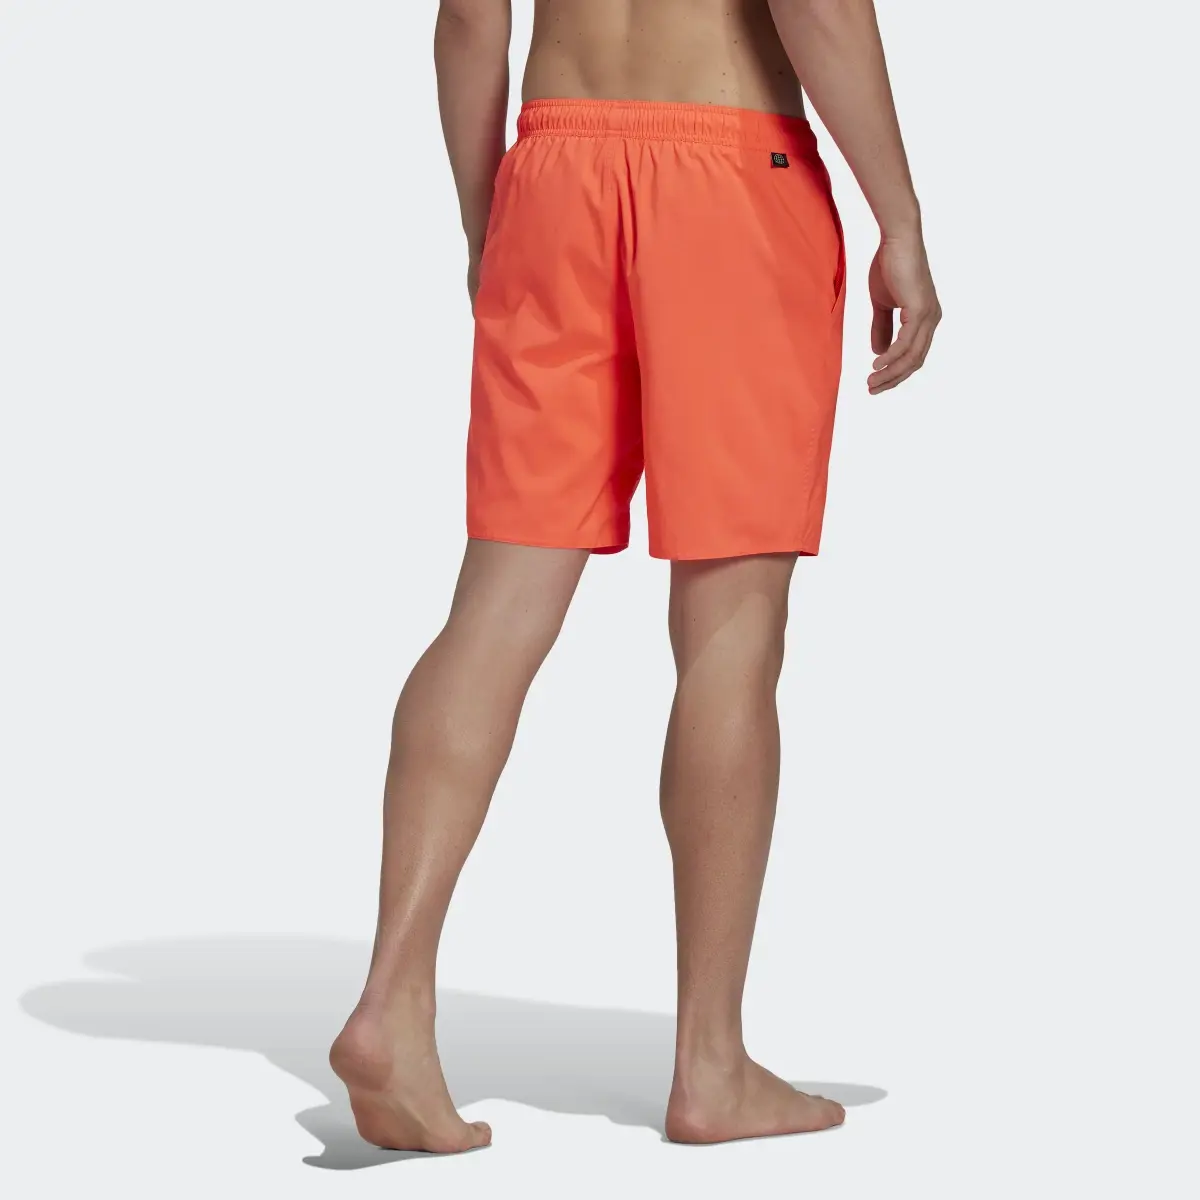 Adidas Classic-Length Solid Swim Shorts. 2